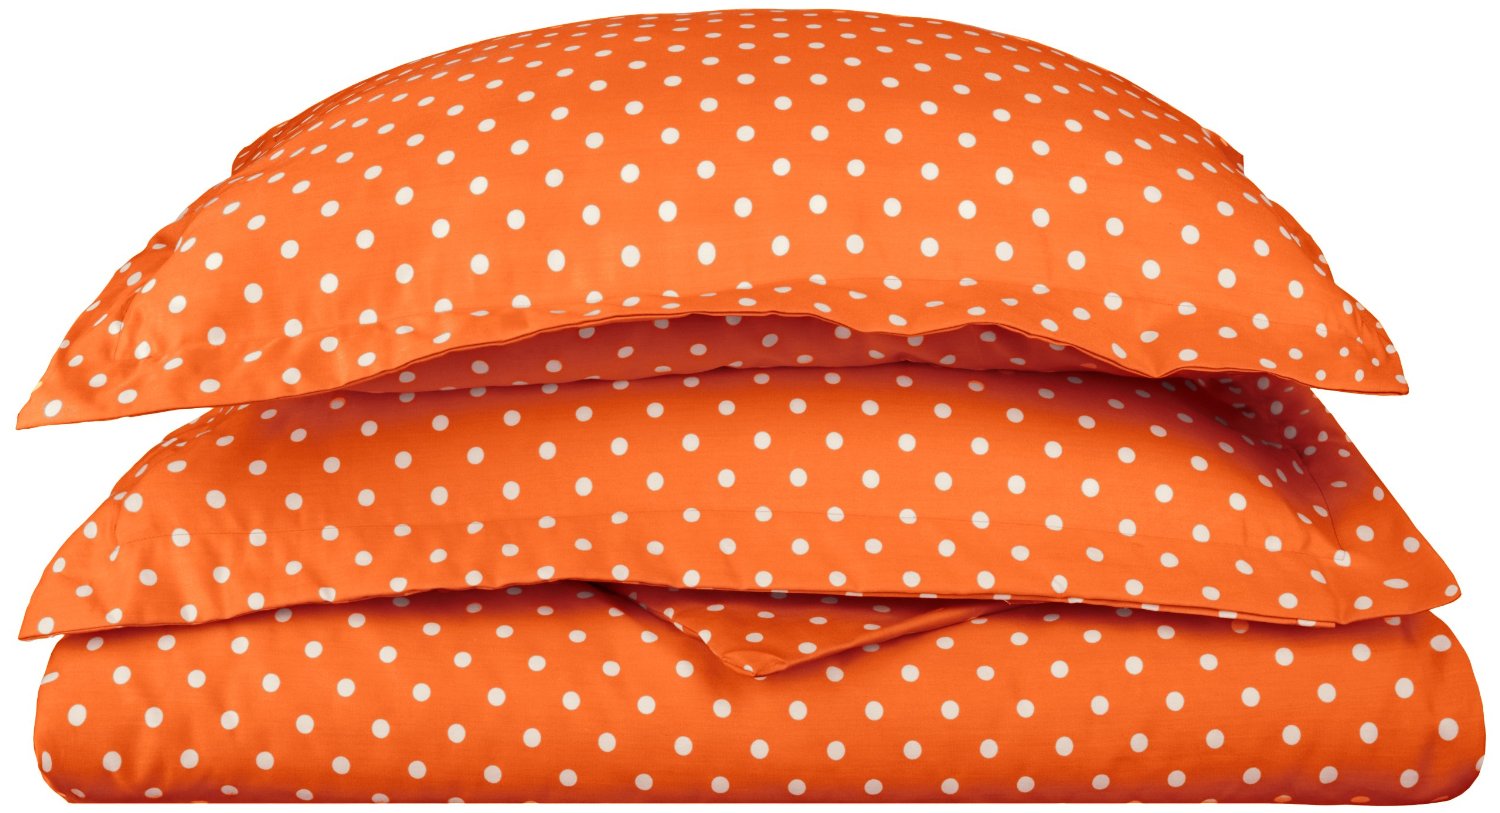 Superior Cotton Blend Polka Dot Luxury Plush Duvet Cover Set - Orange